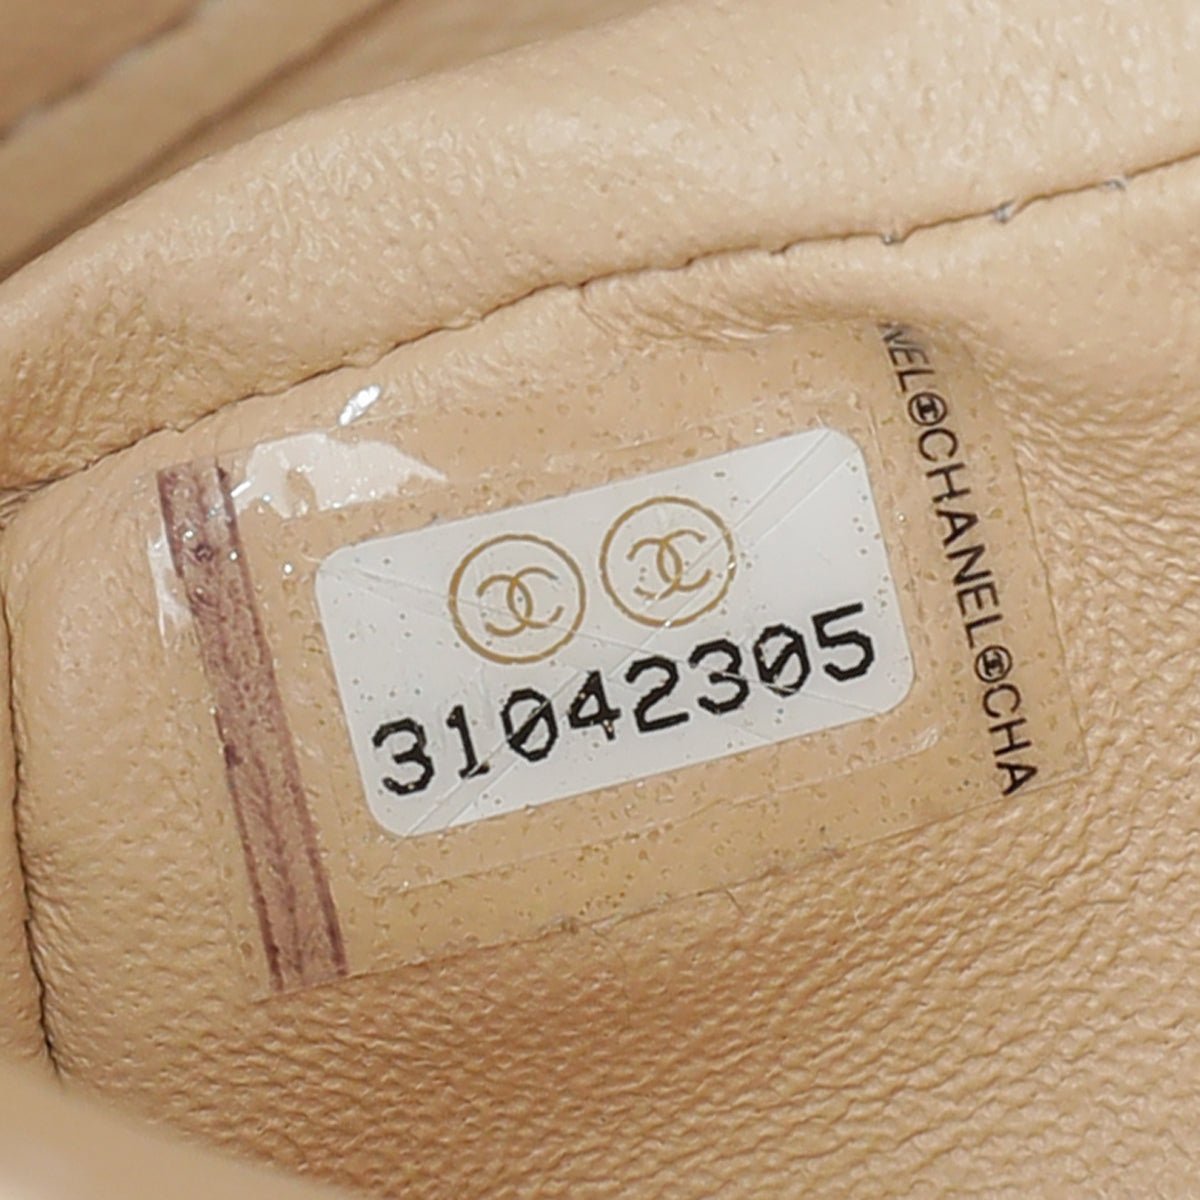 Chanel - Chanel Beige CC Classic Double Flap Medium Bag | The Closet